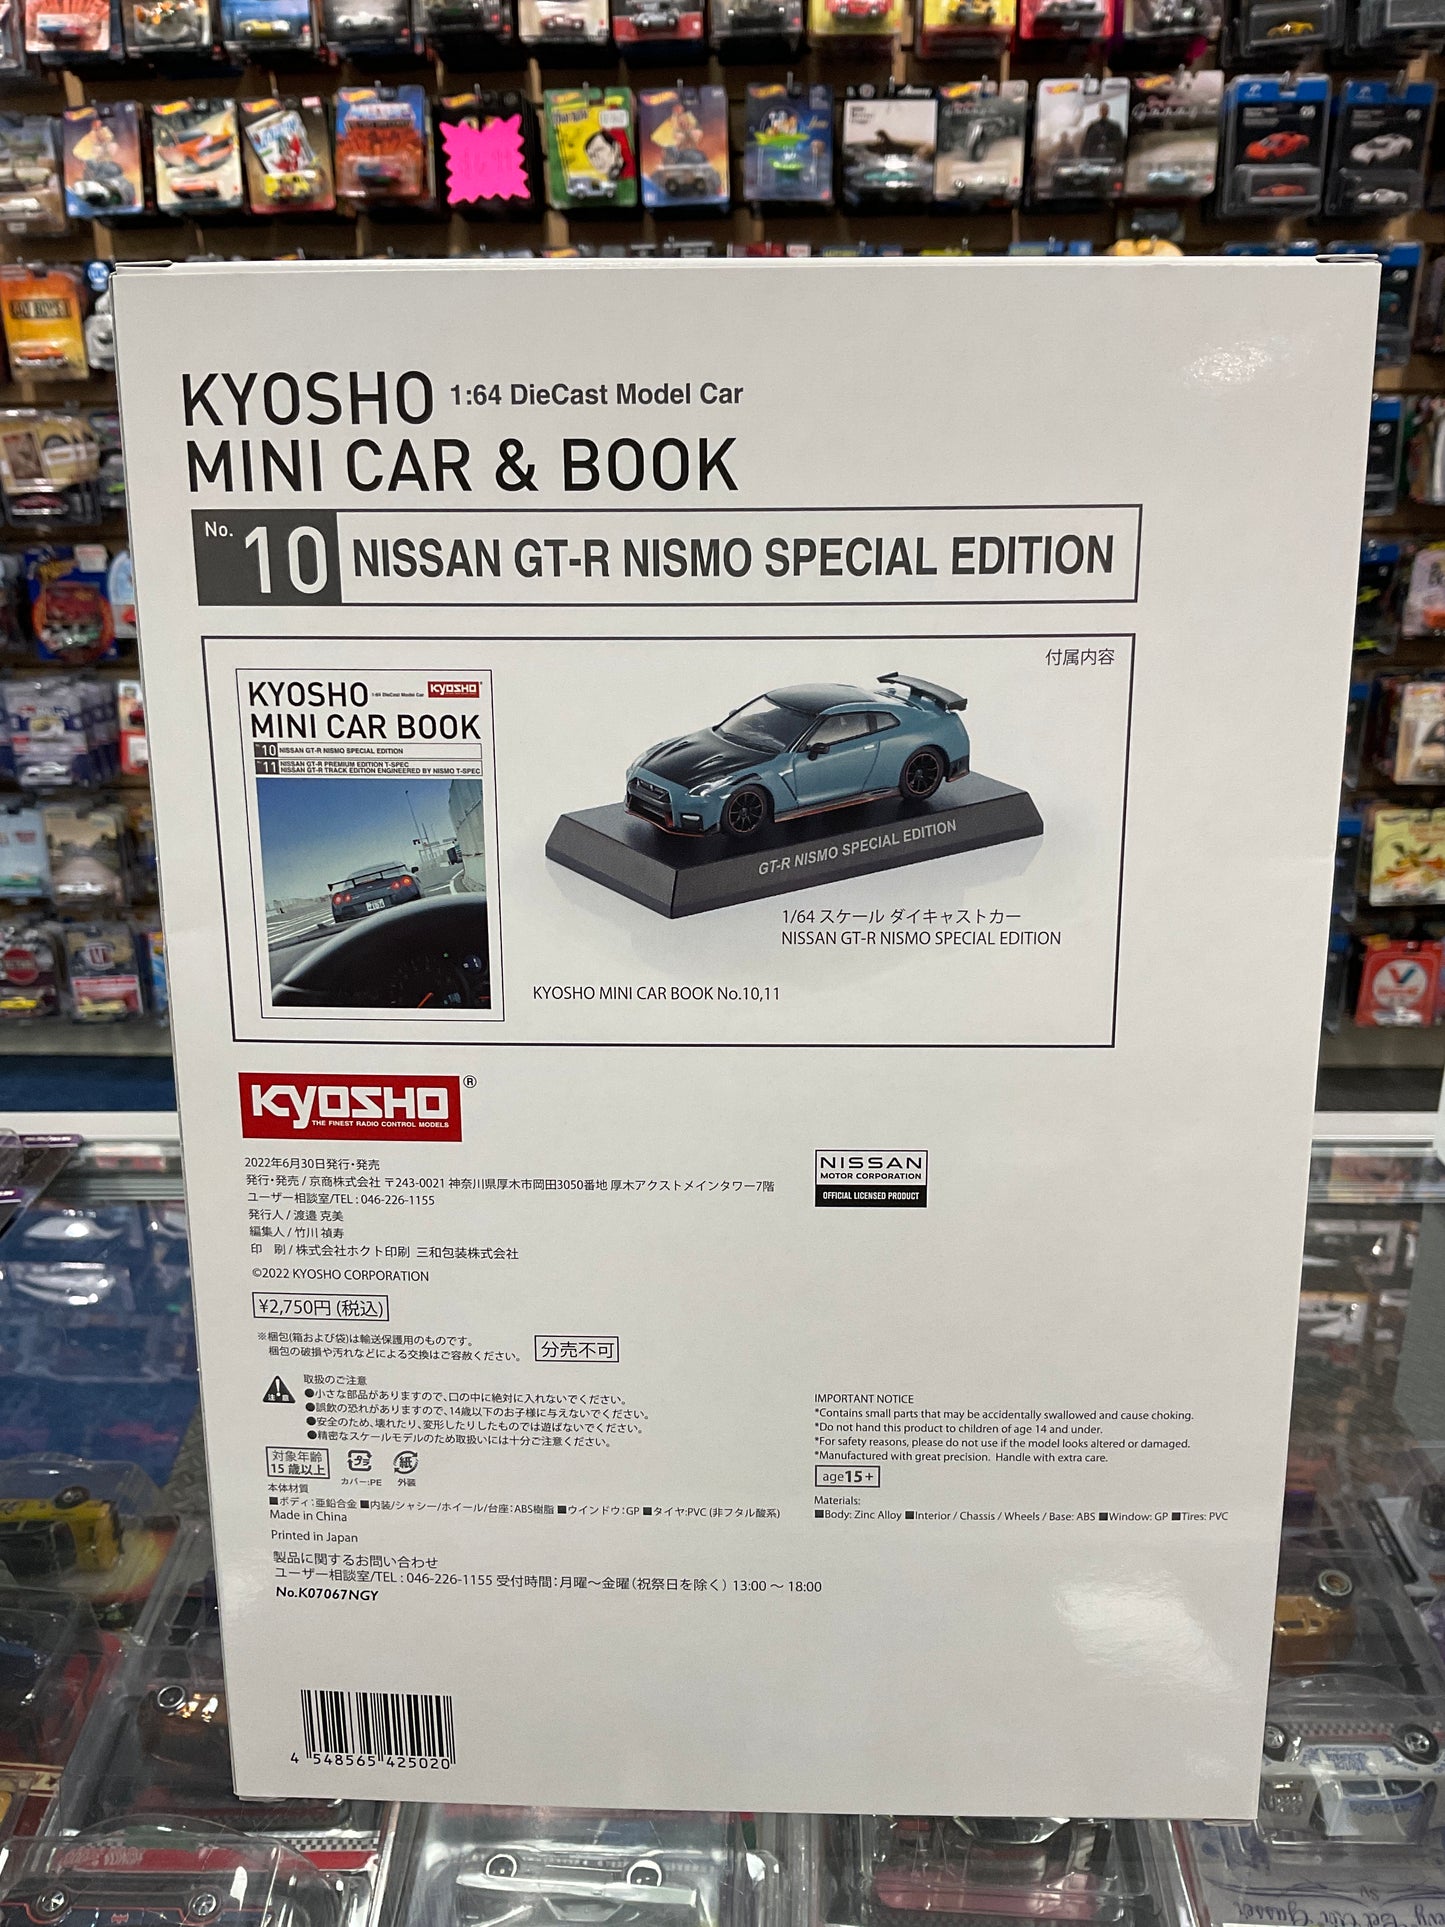 Kyosho mini book & car set #10 Nissan GT-R Nismo Special Edition